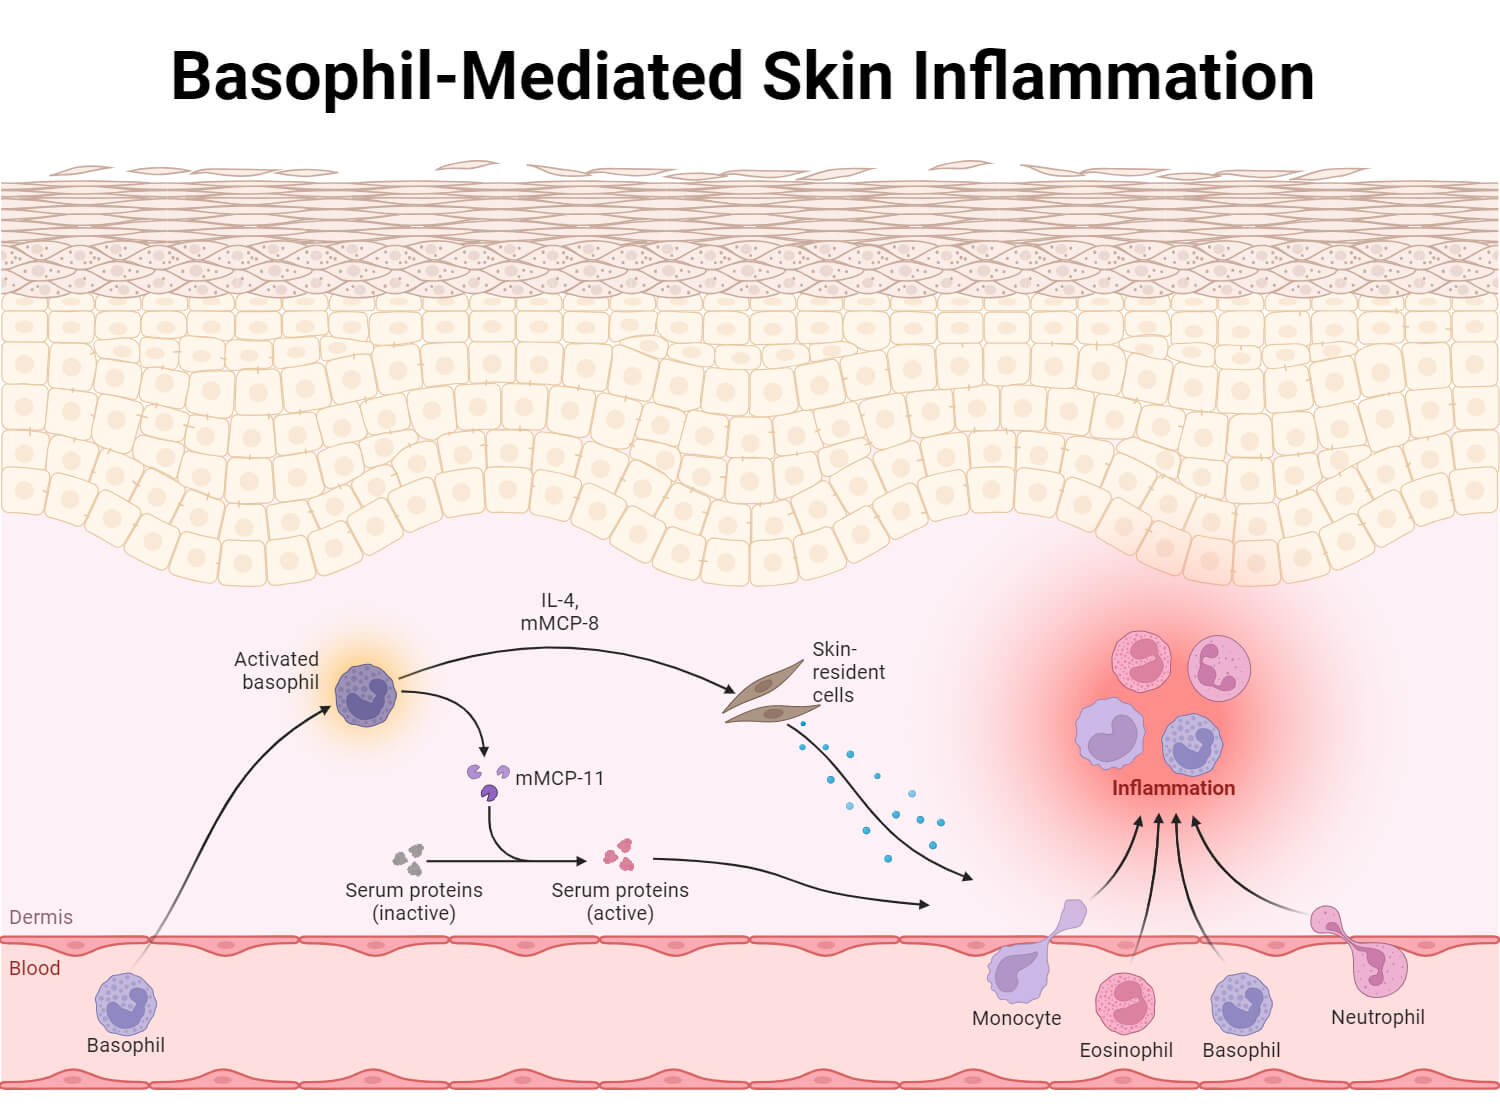 Basophil-Mediated Skin Inflammation